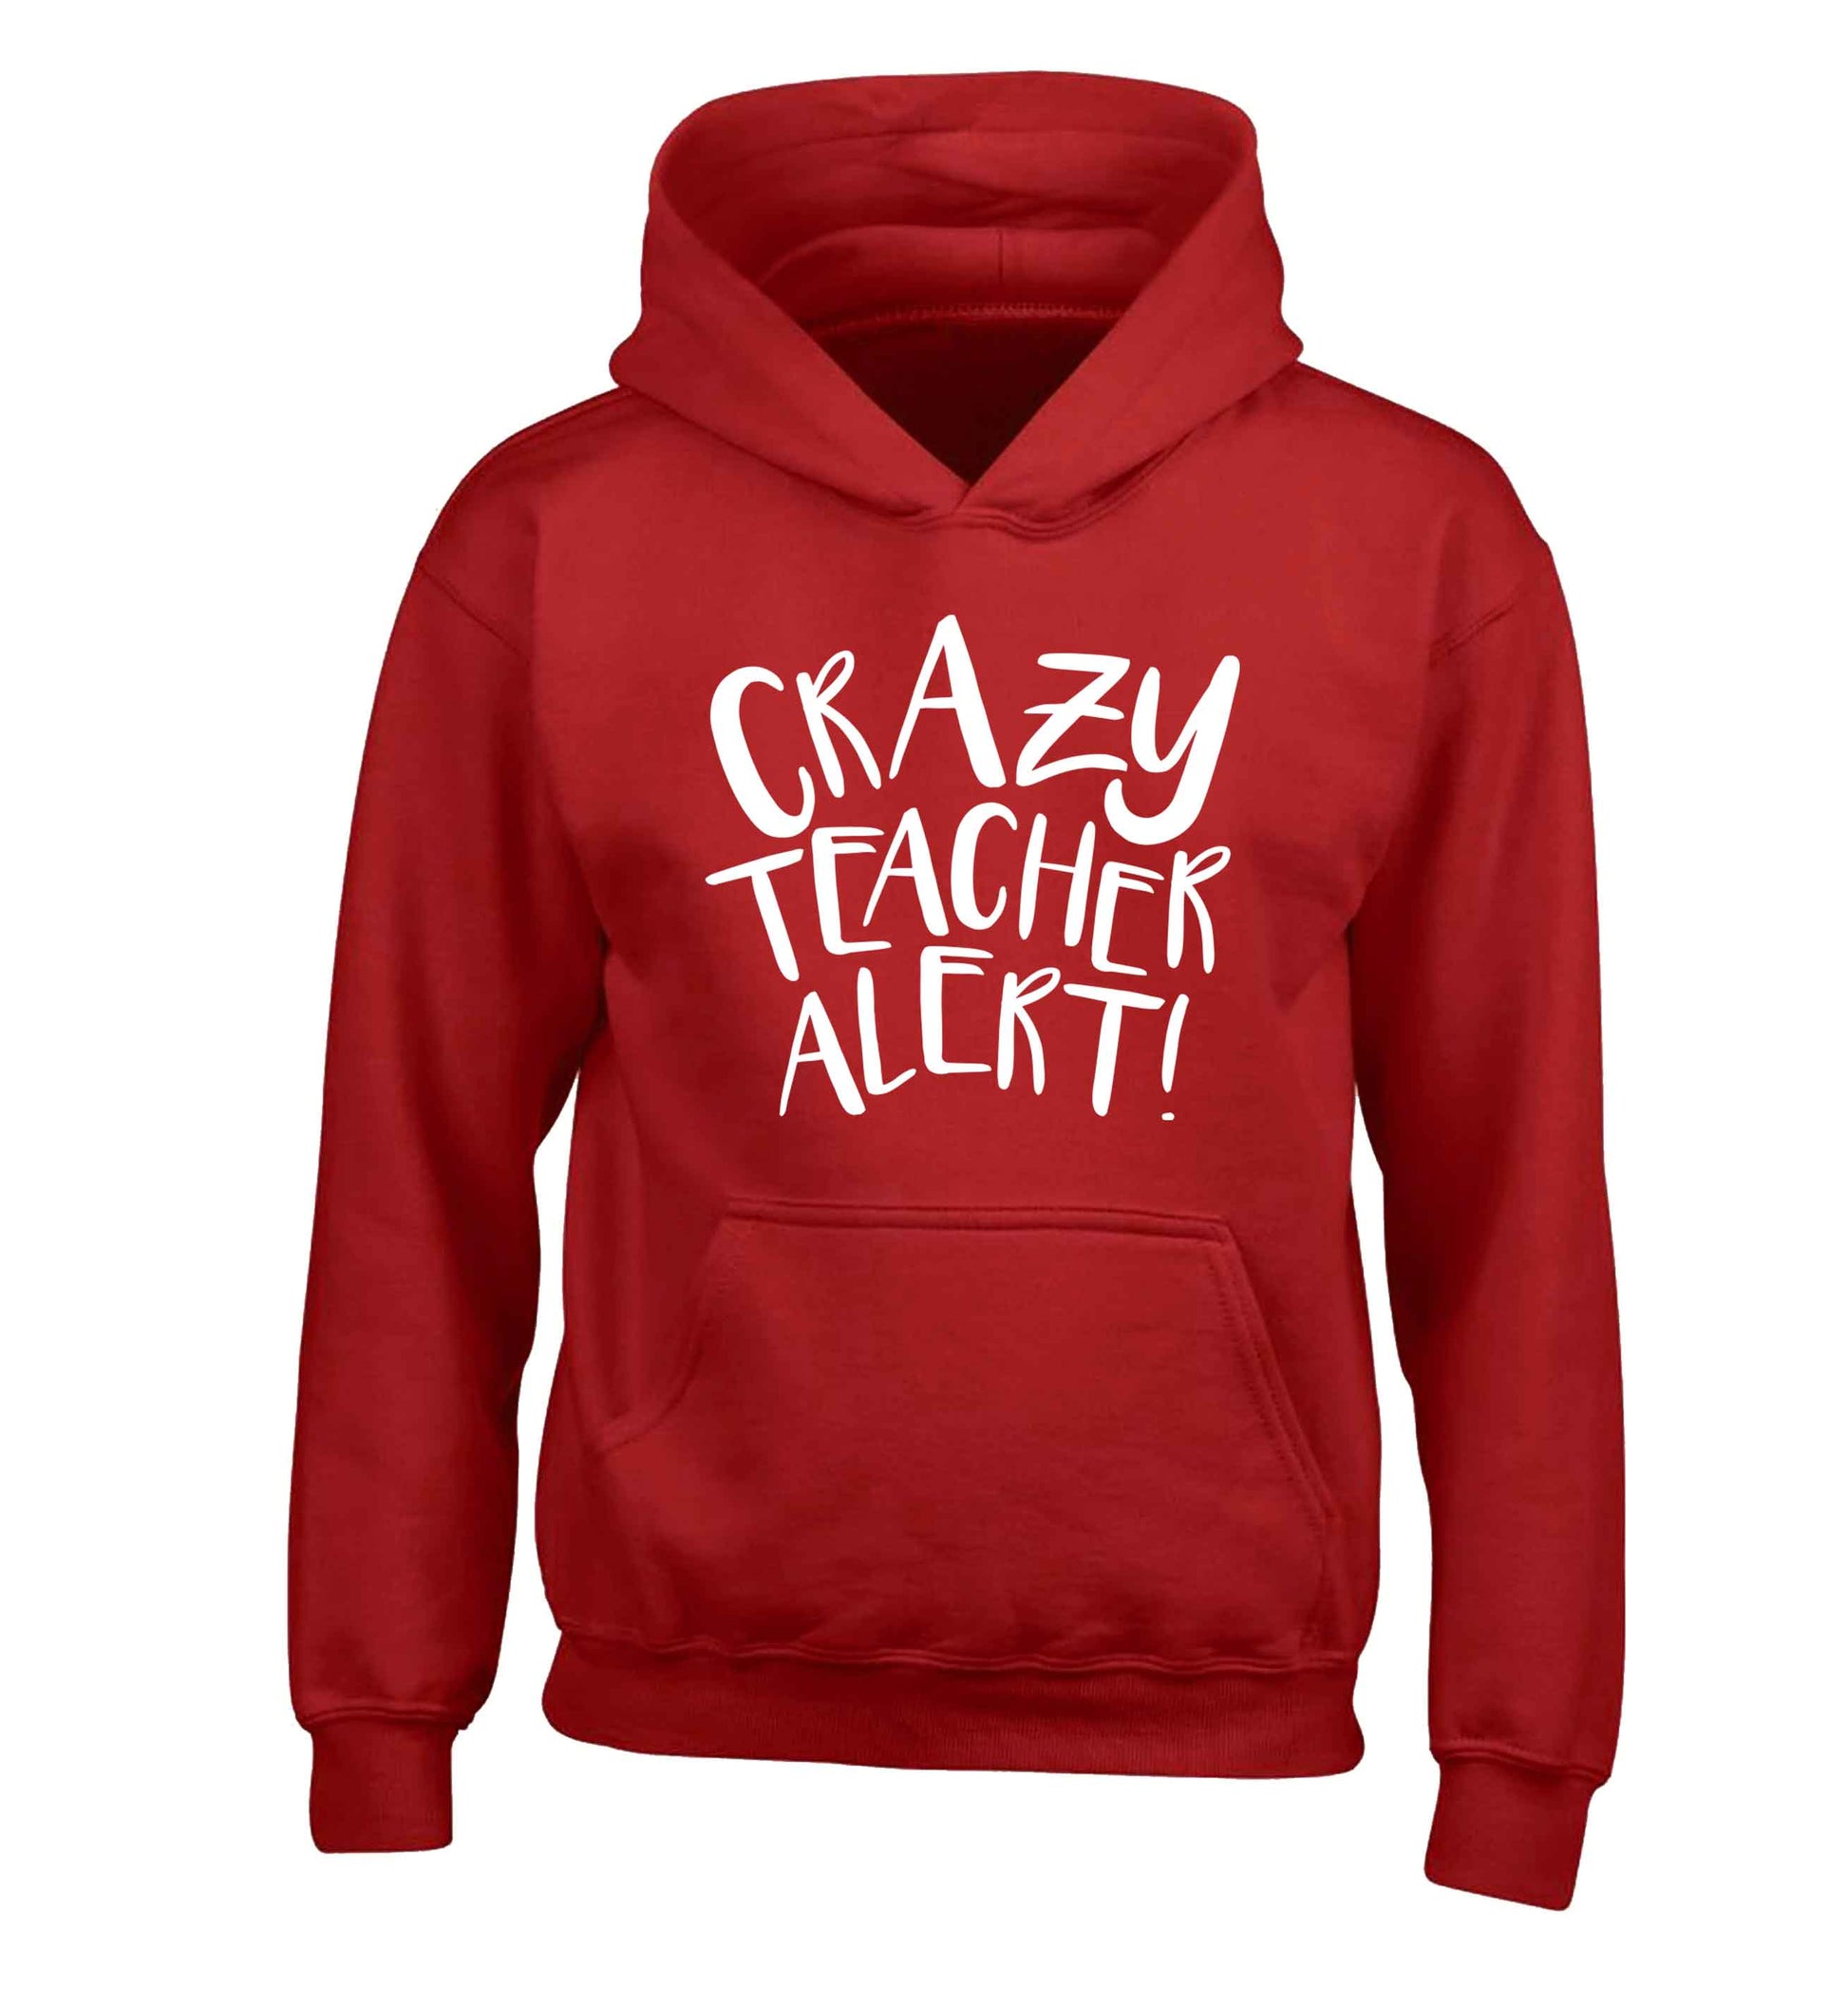 Crazy teacher alert children's red hoodie 12-13 Years